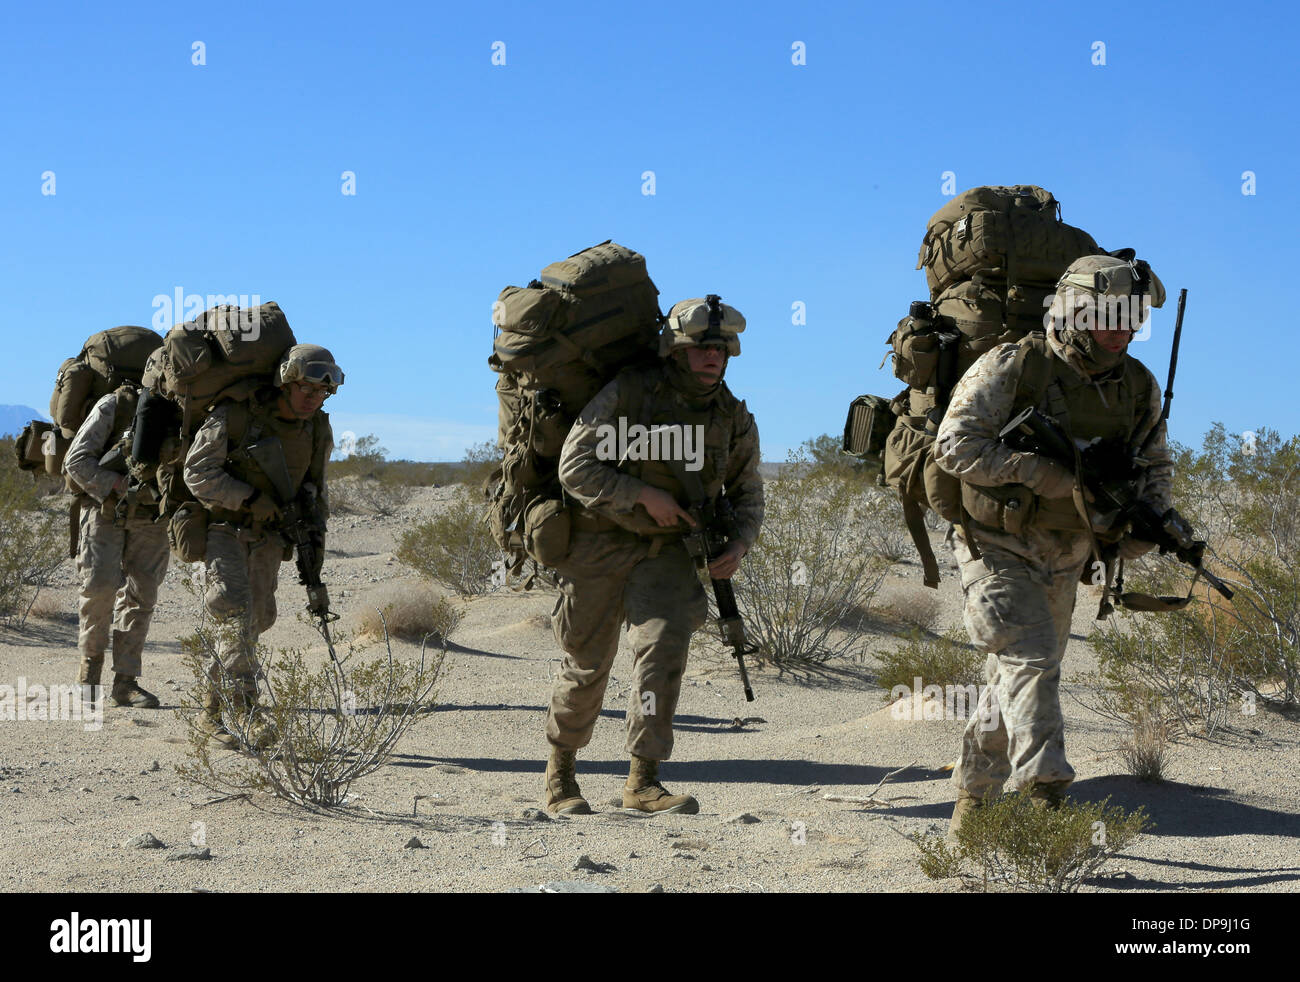 U.S. Marines conduct a foot patrol during training, USA Stock Photo